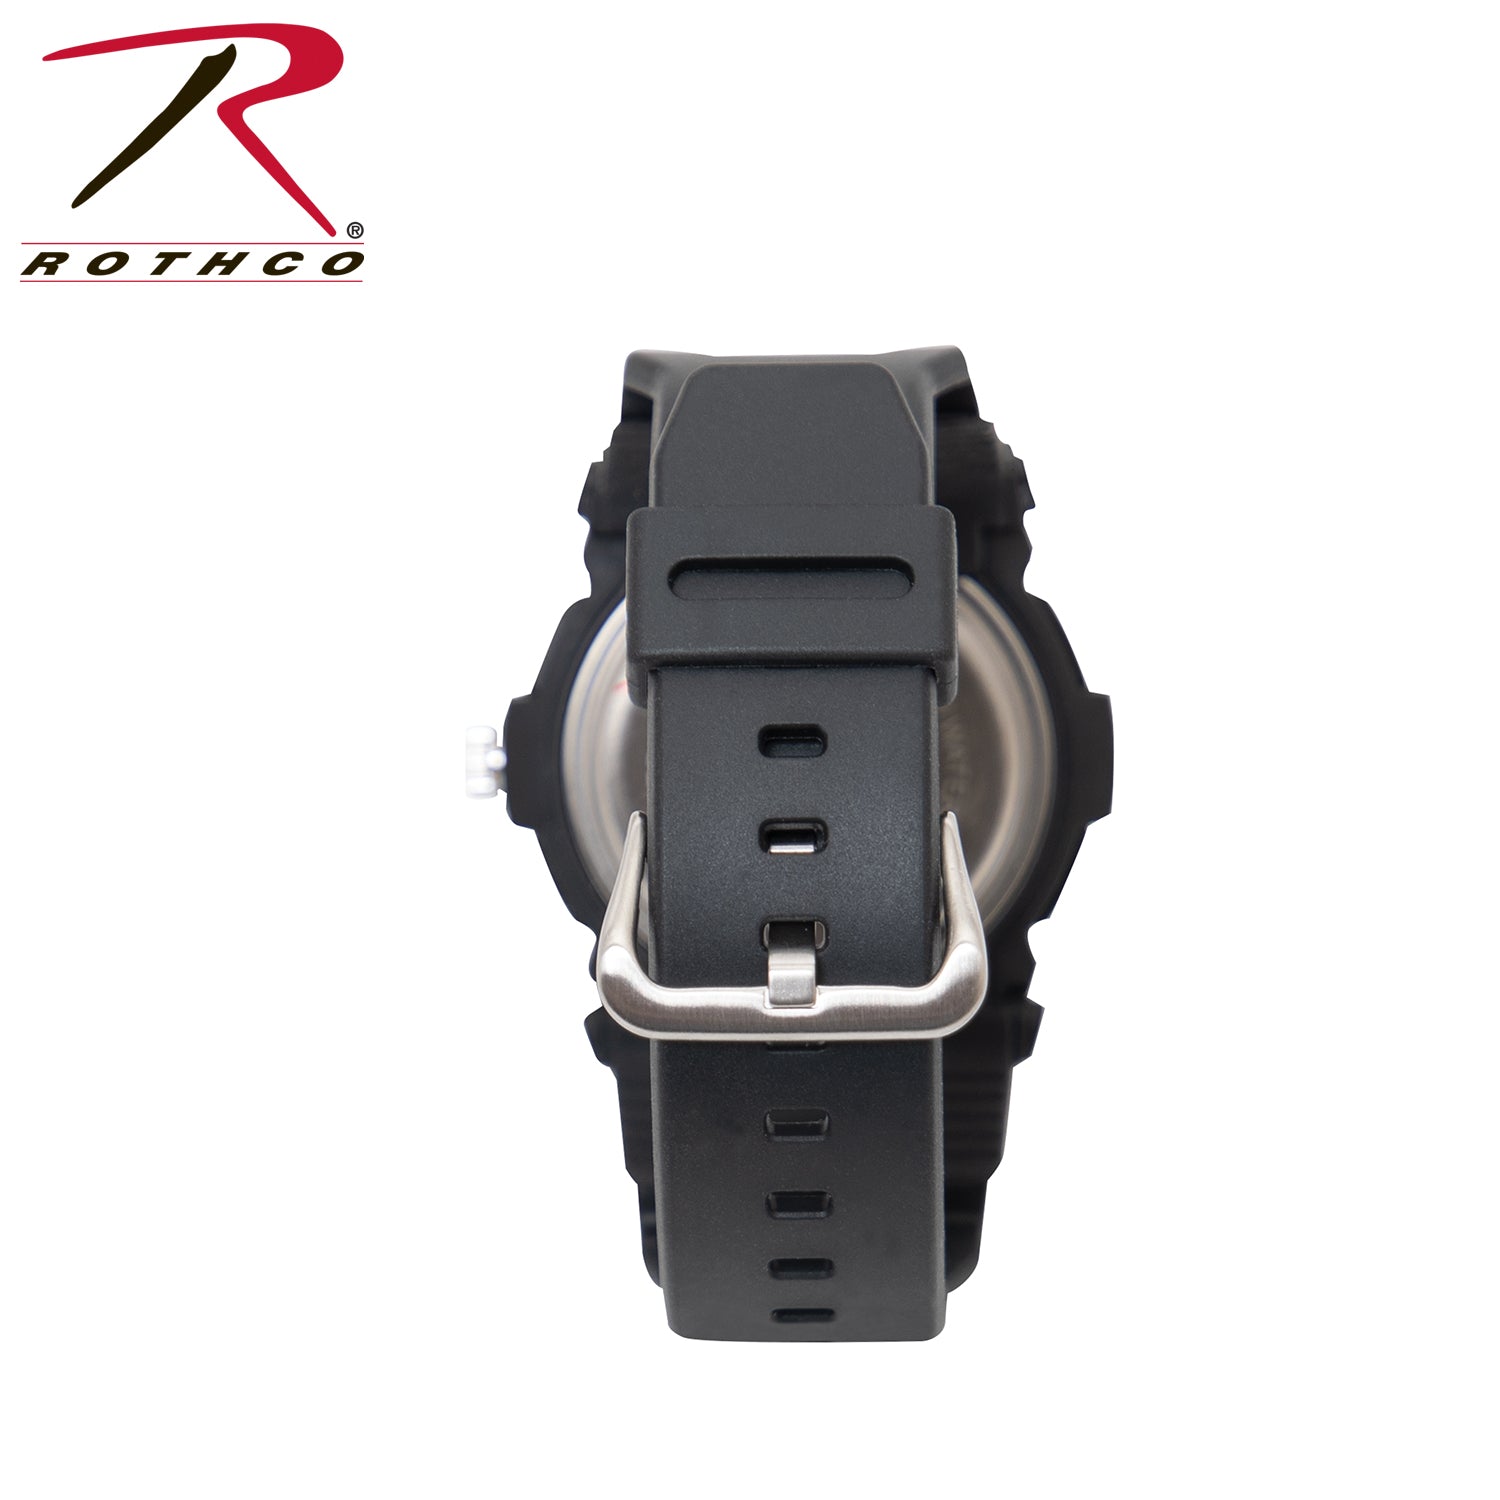 Aquaforce Digital Quartz Watch Men 50m Black Alarm Chrono New Battery | eBay